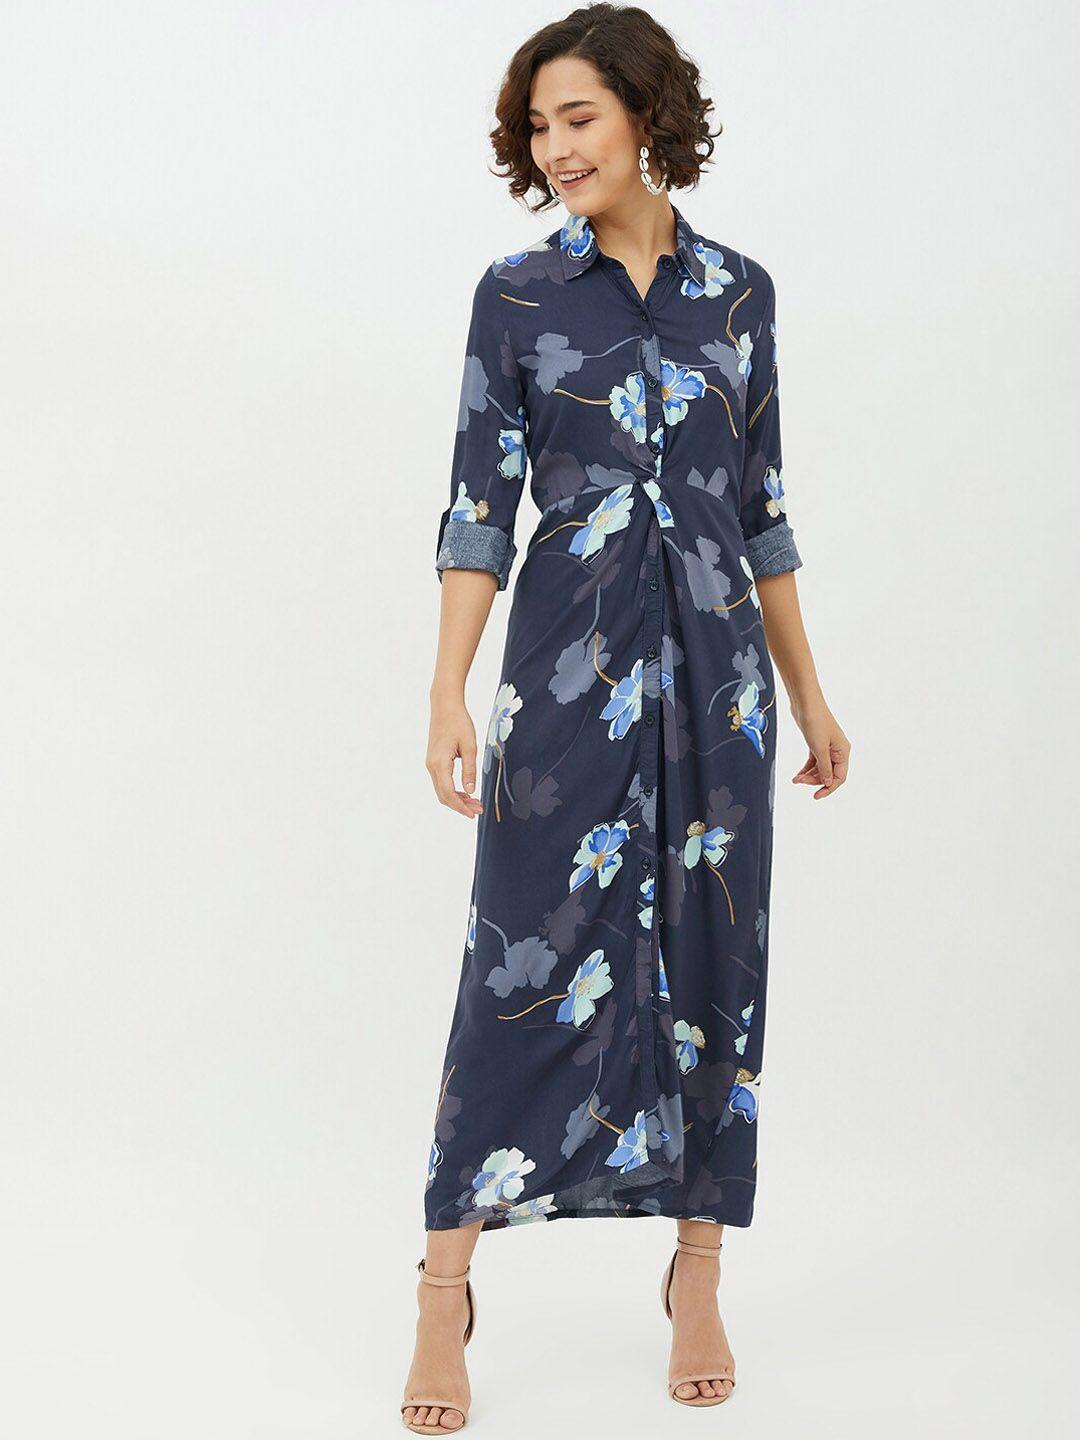 stylestone-women-blue-printed-maxi-dress